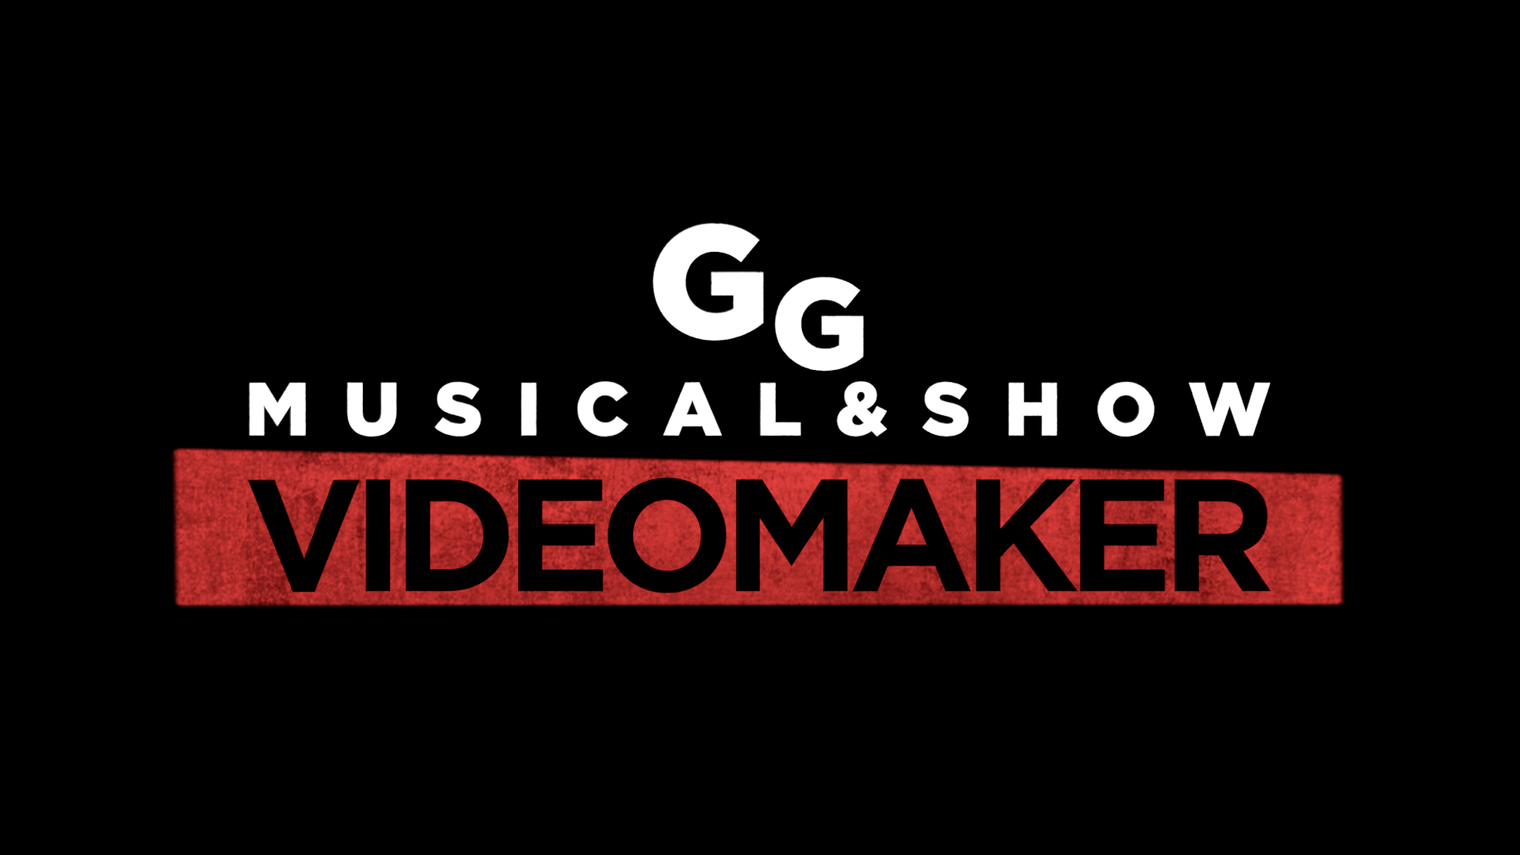 GG Musical&Show Videomaker